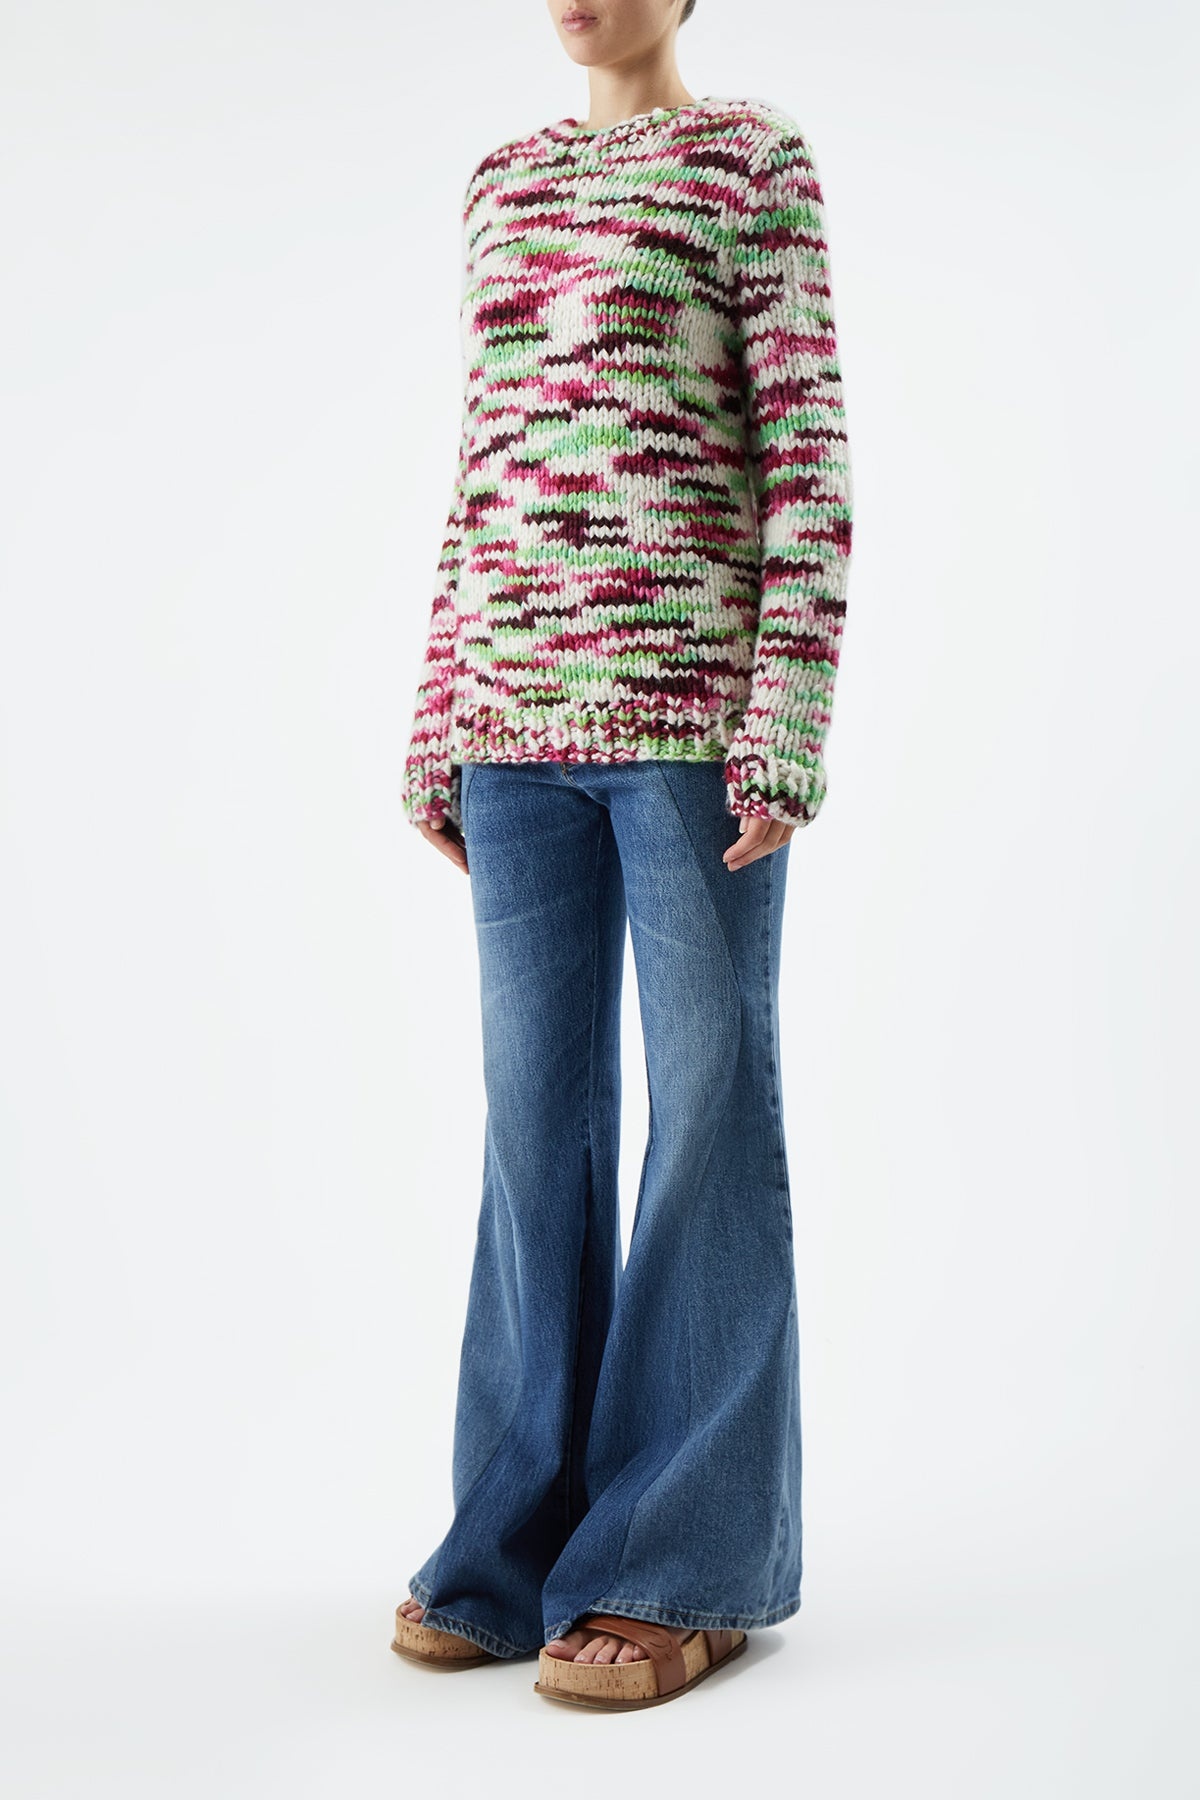 Lawrence Sweater Space Dye in Jewel Multi Welfat Cashmere - 3